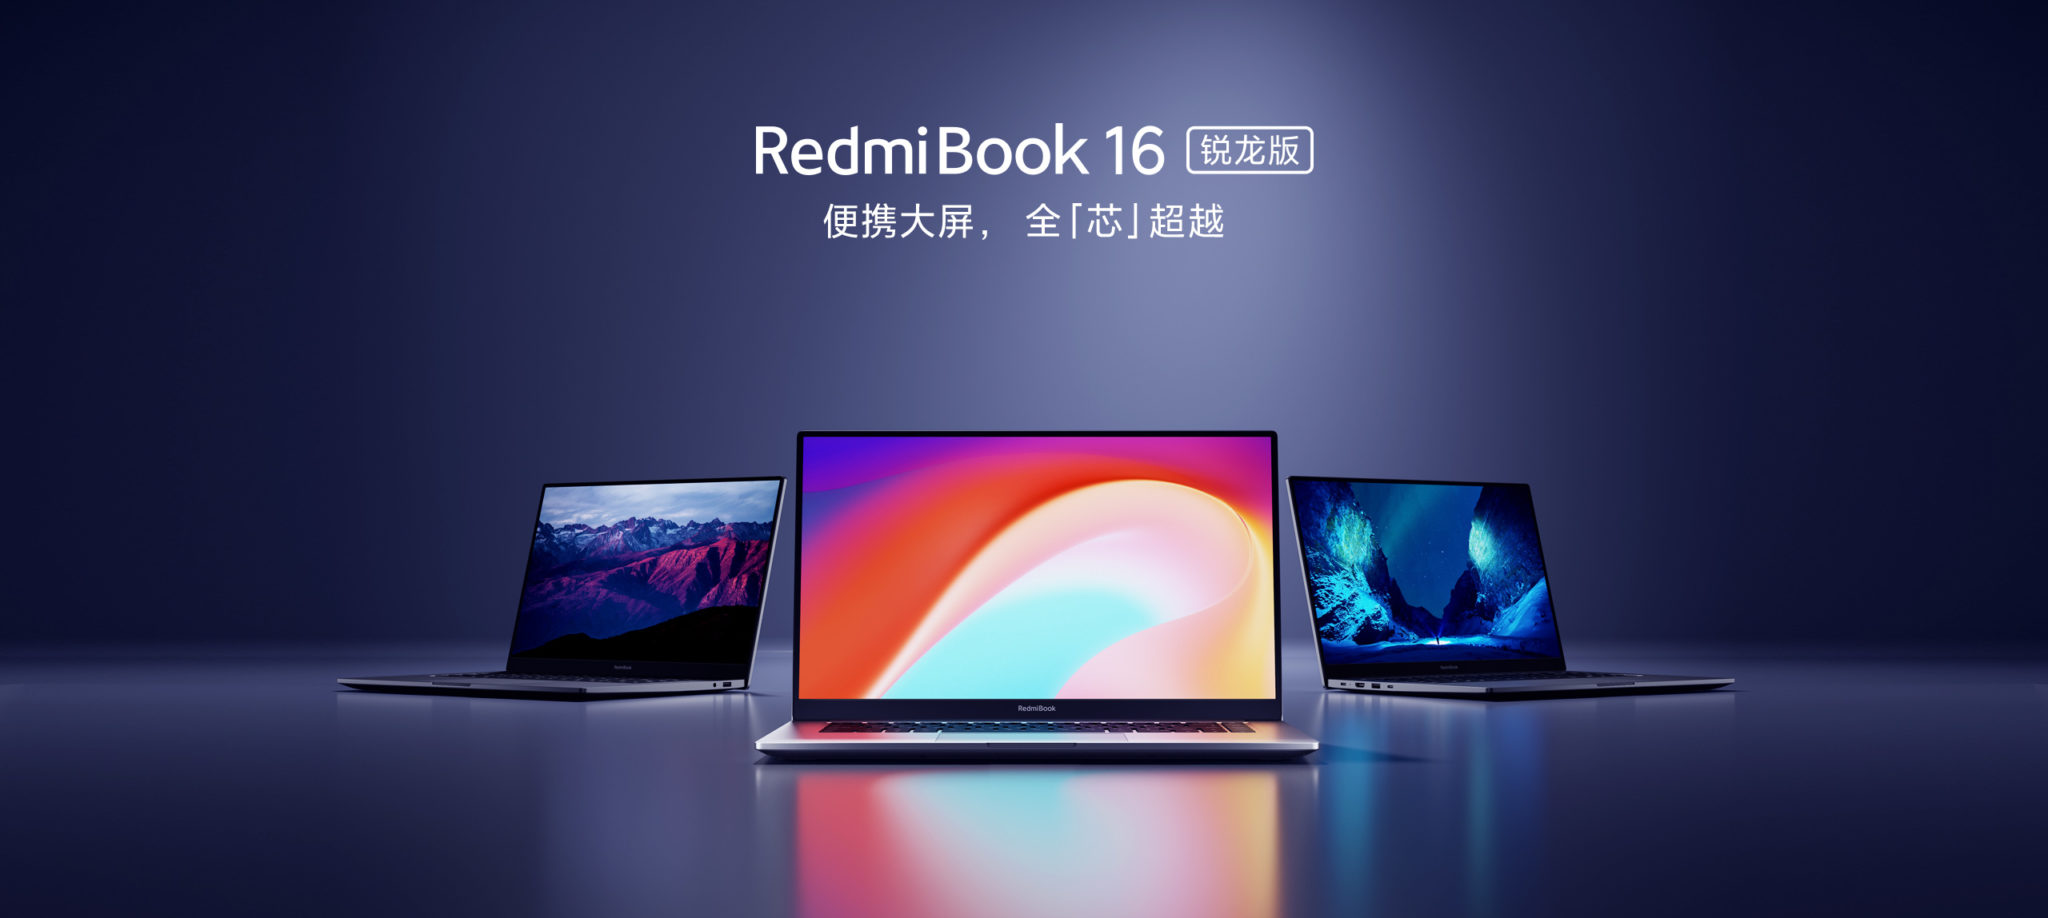 laptop Xiaomi RedmiBook 16 - promocja